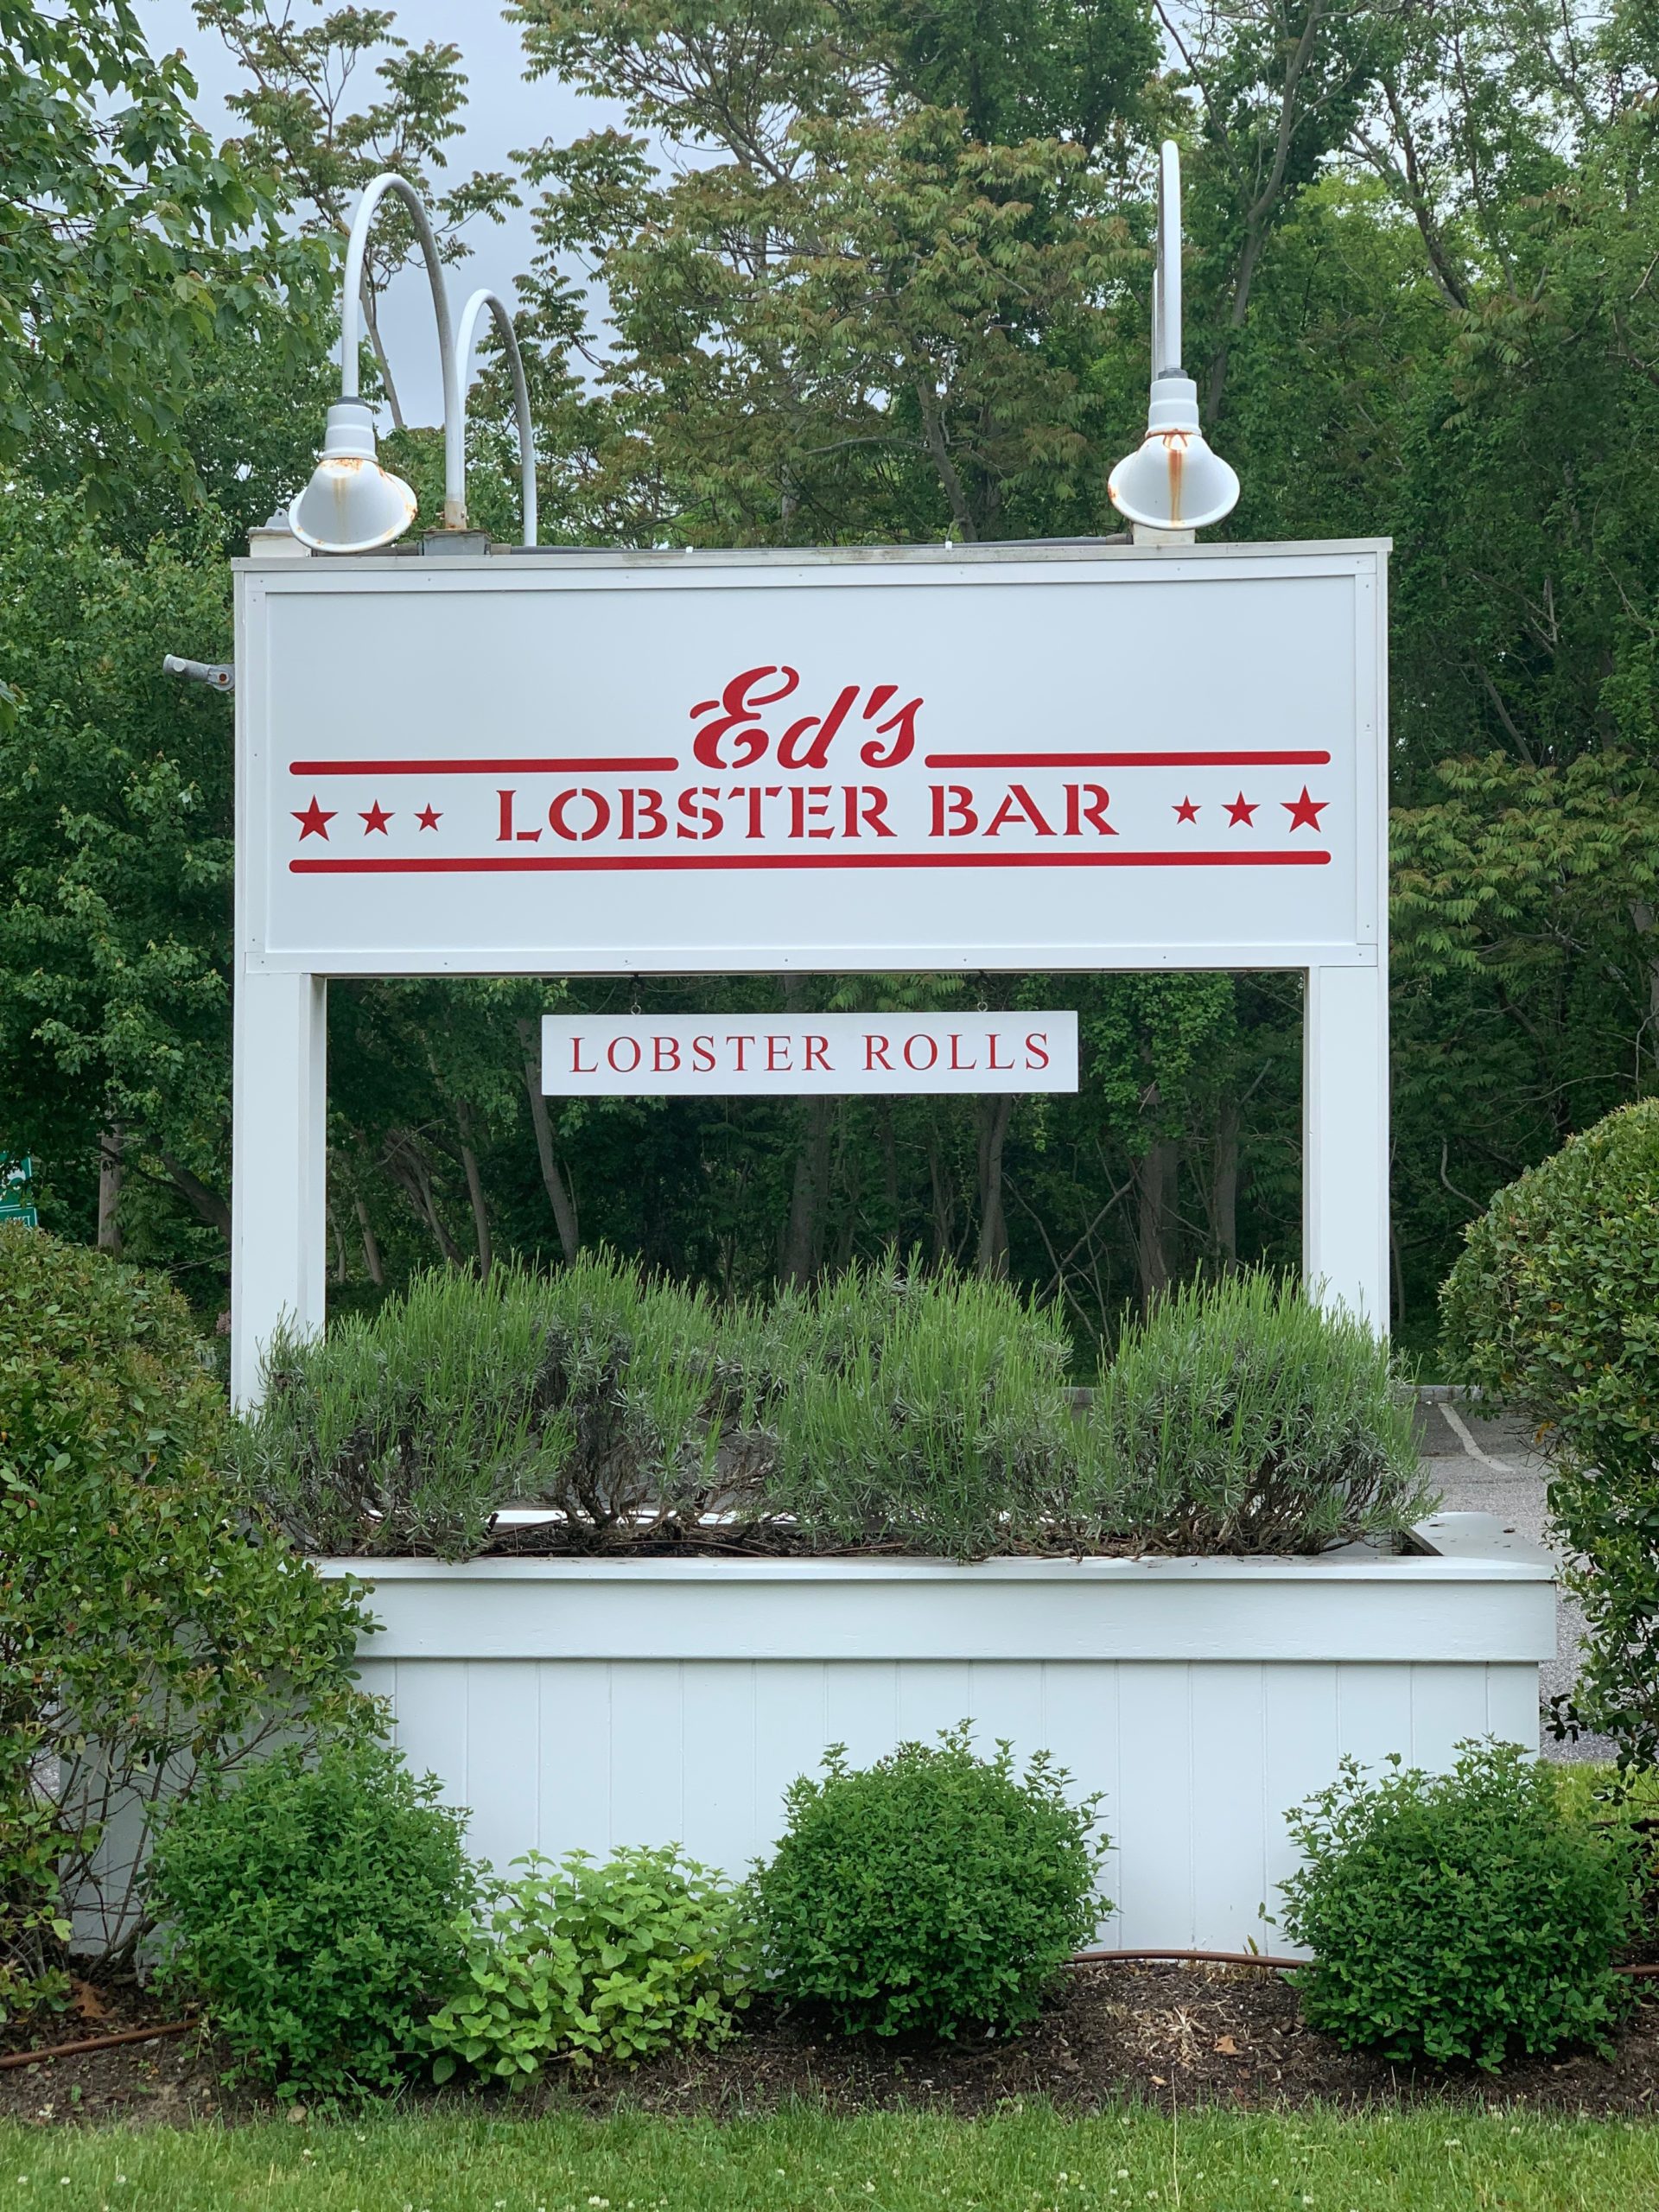 Ed's Lobster bar is offering an Easter brunch prix-fixe.